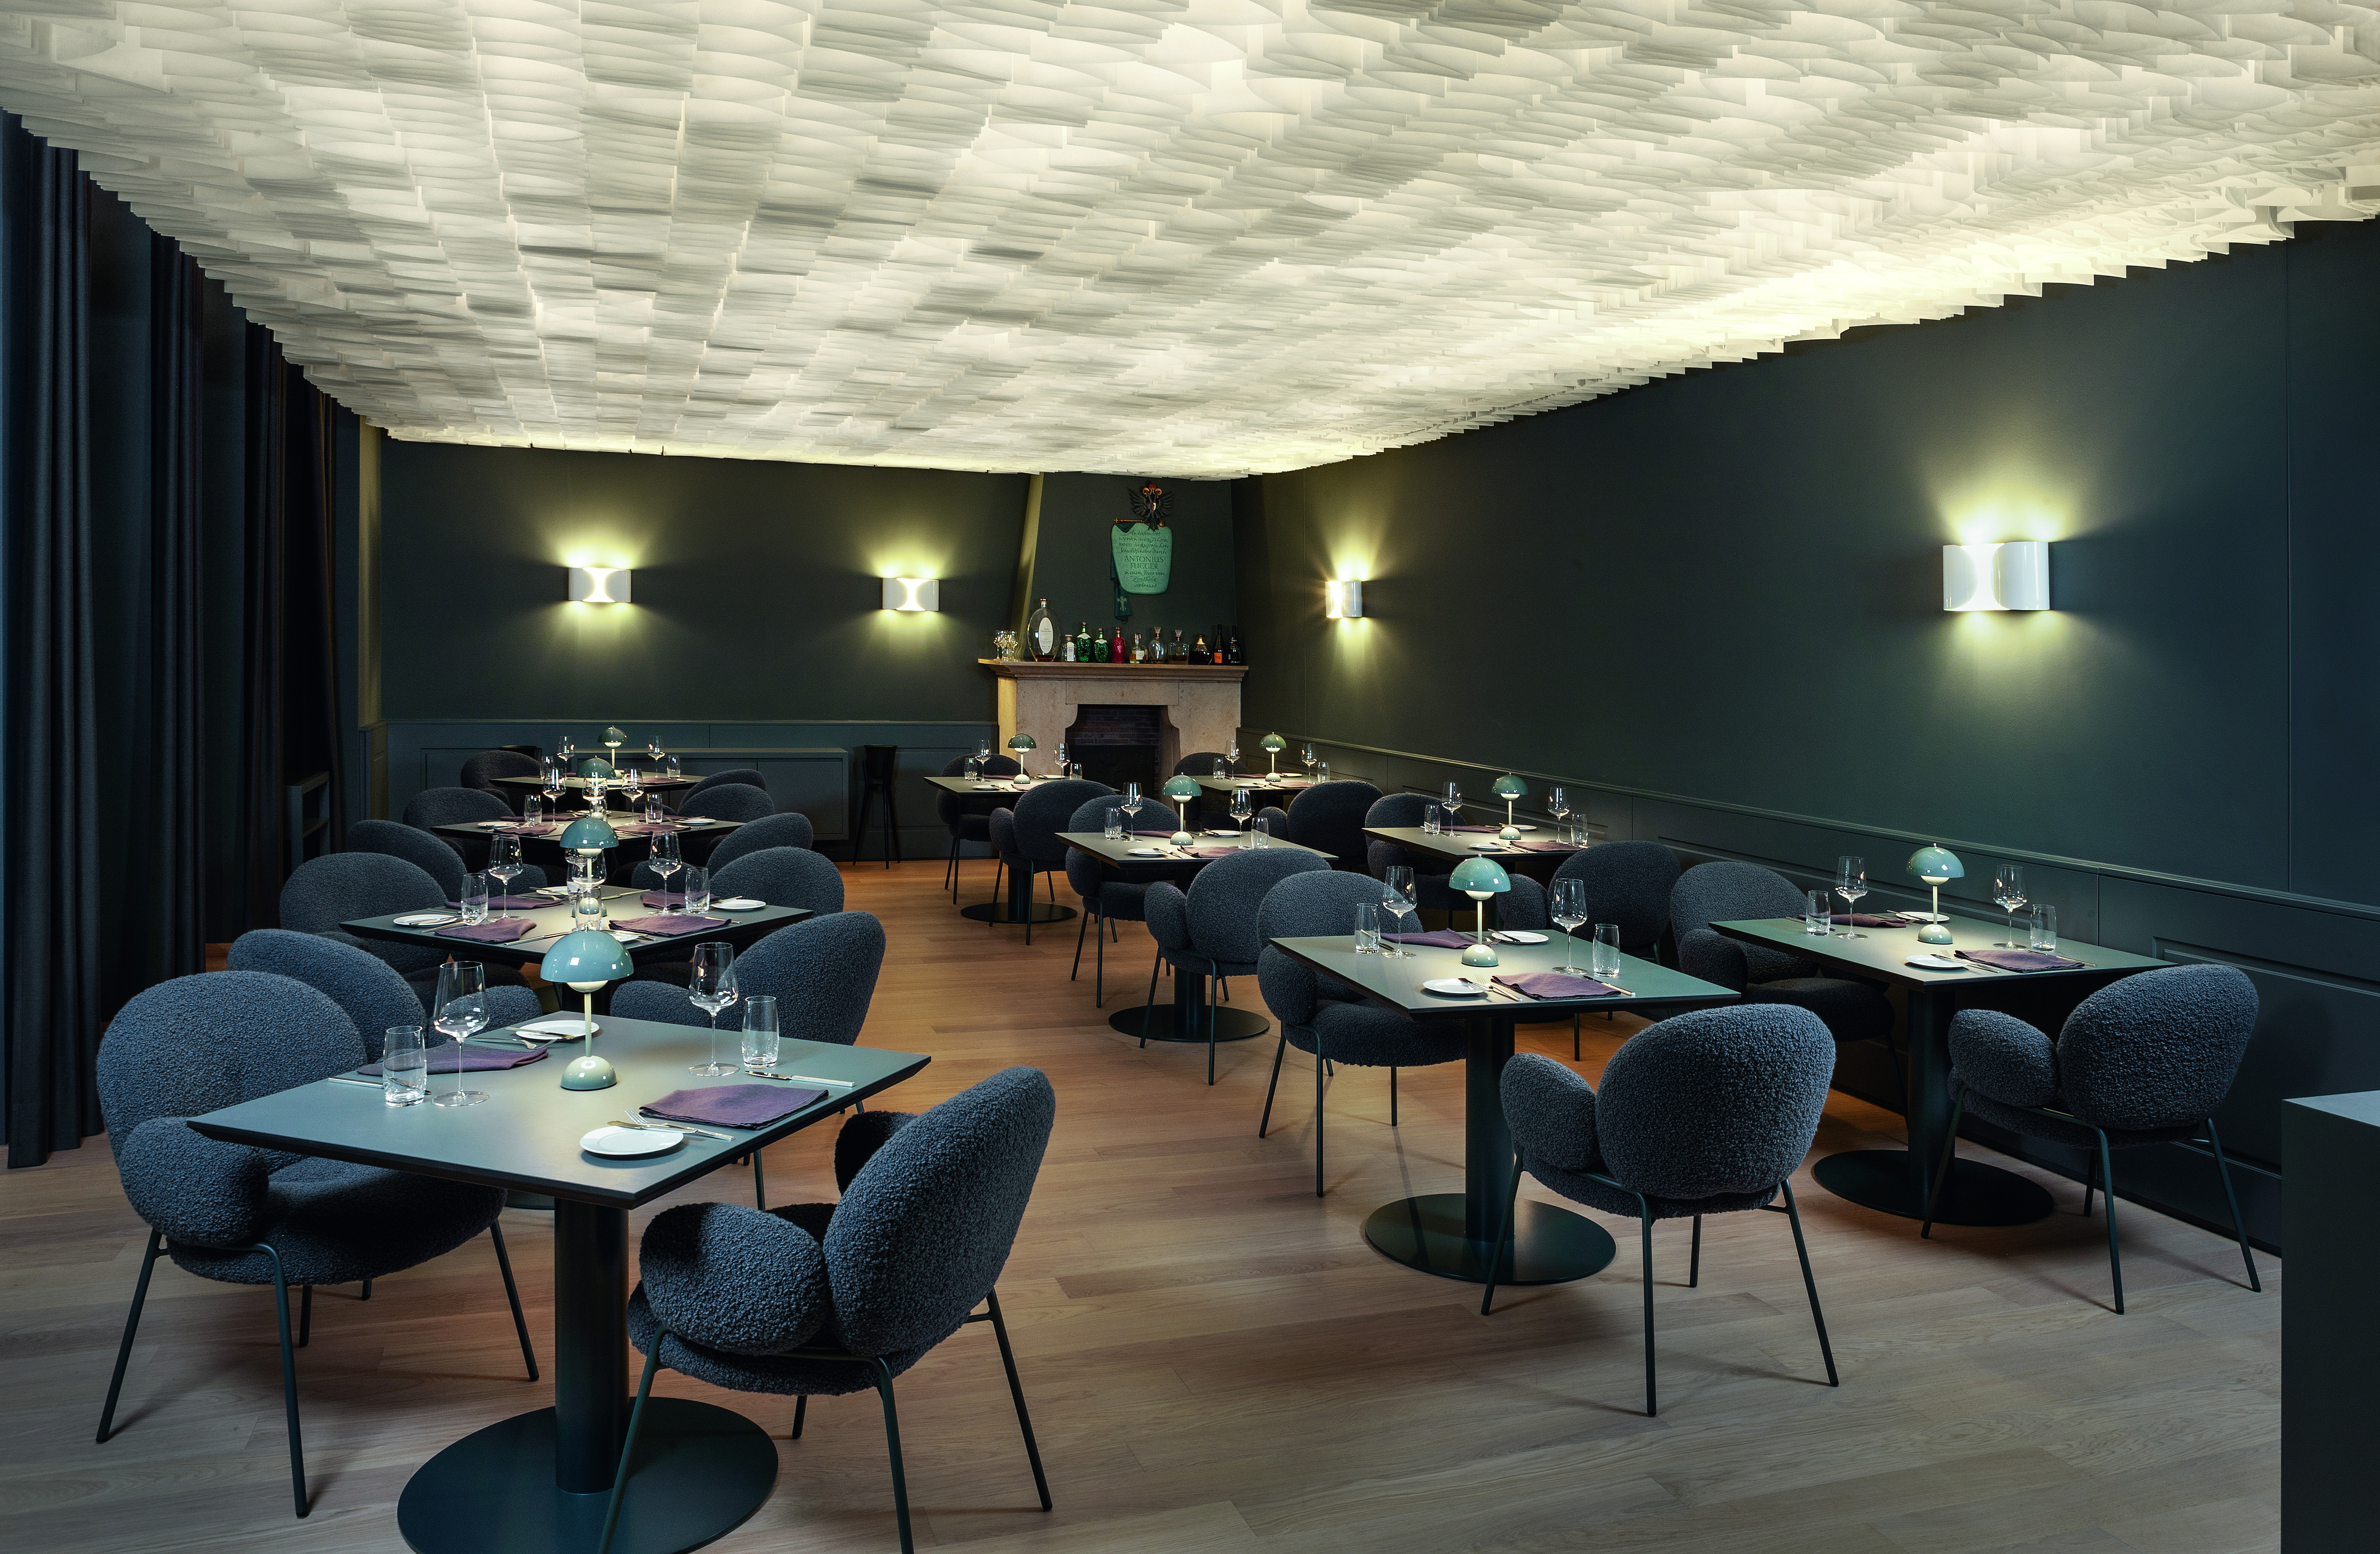 Sartory Restaurant - Hotel Maximilian's in Augsburg